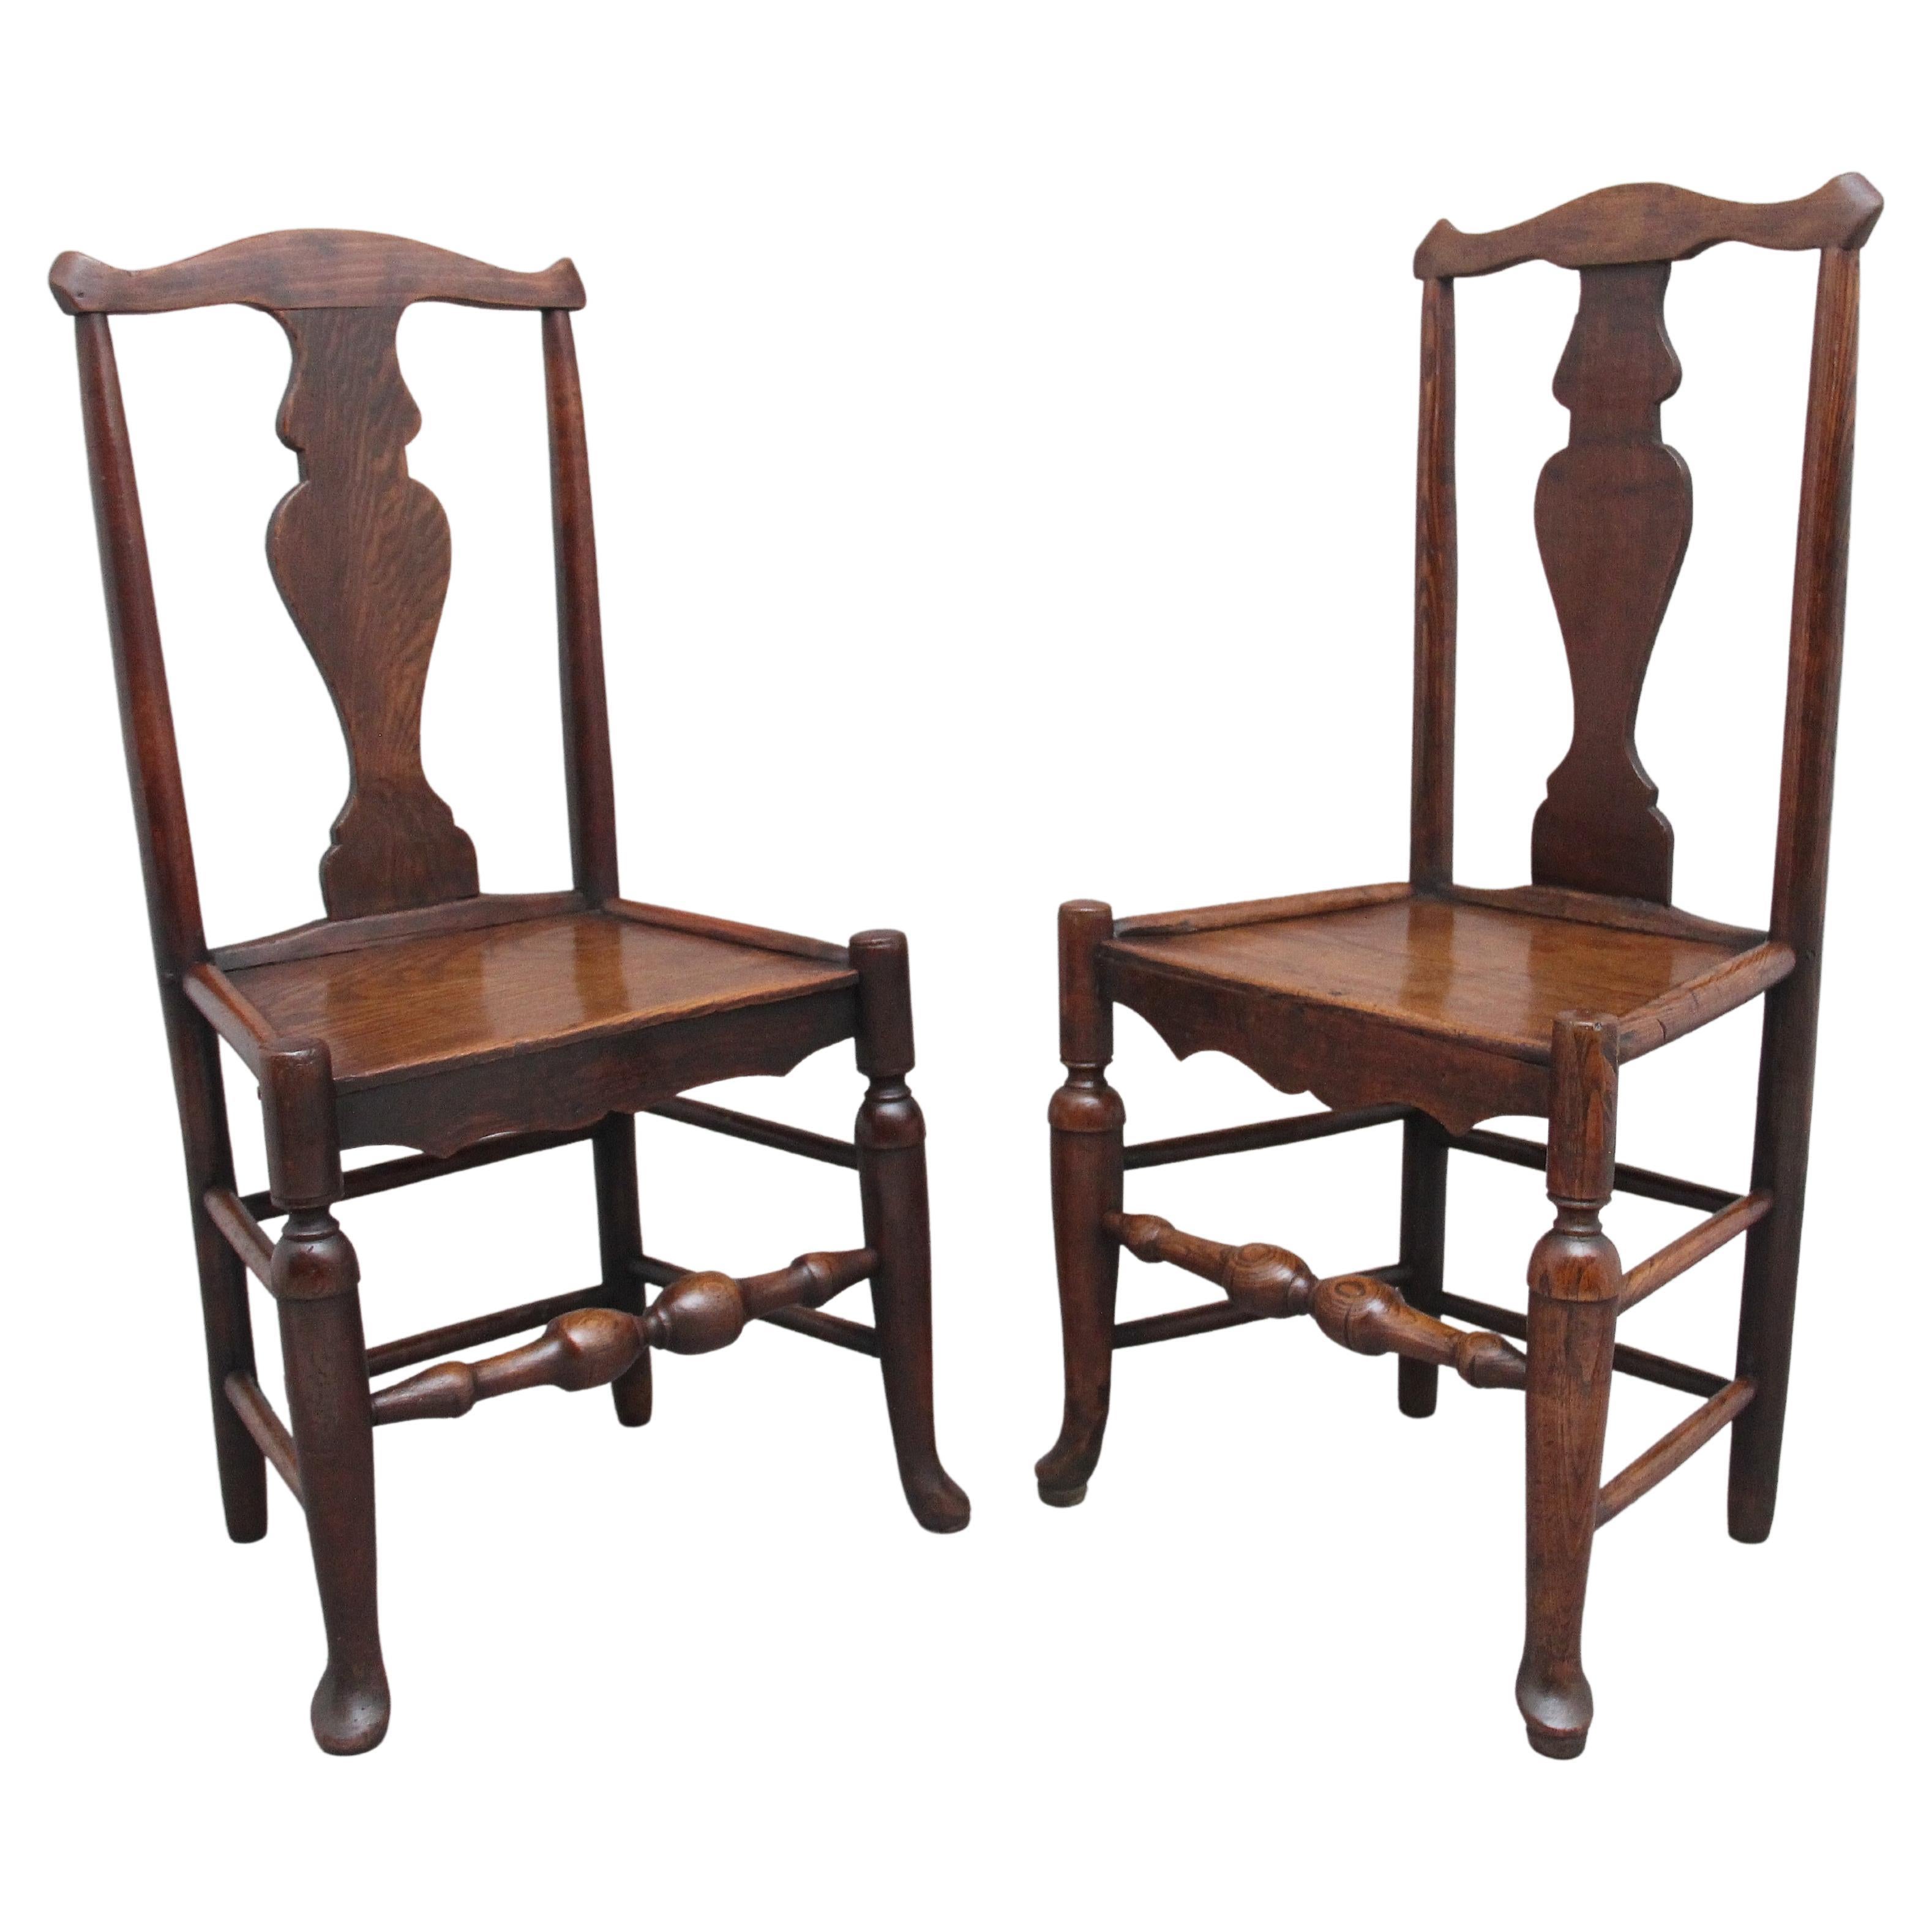 Paar antike Ulmenholz-Beistellstühle aus dem 18. Jahrhundert